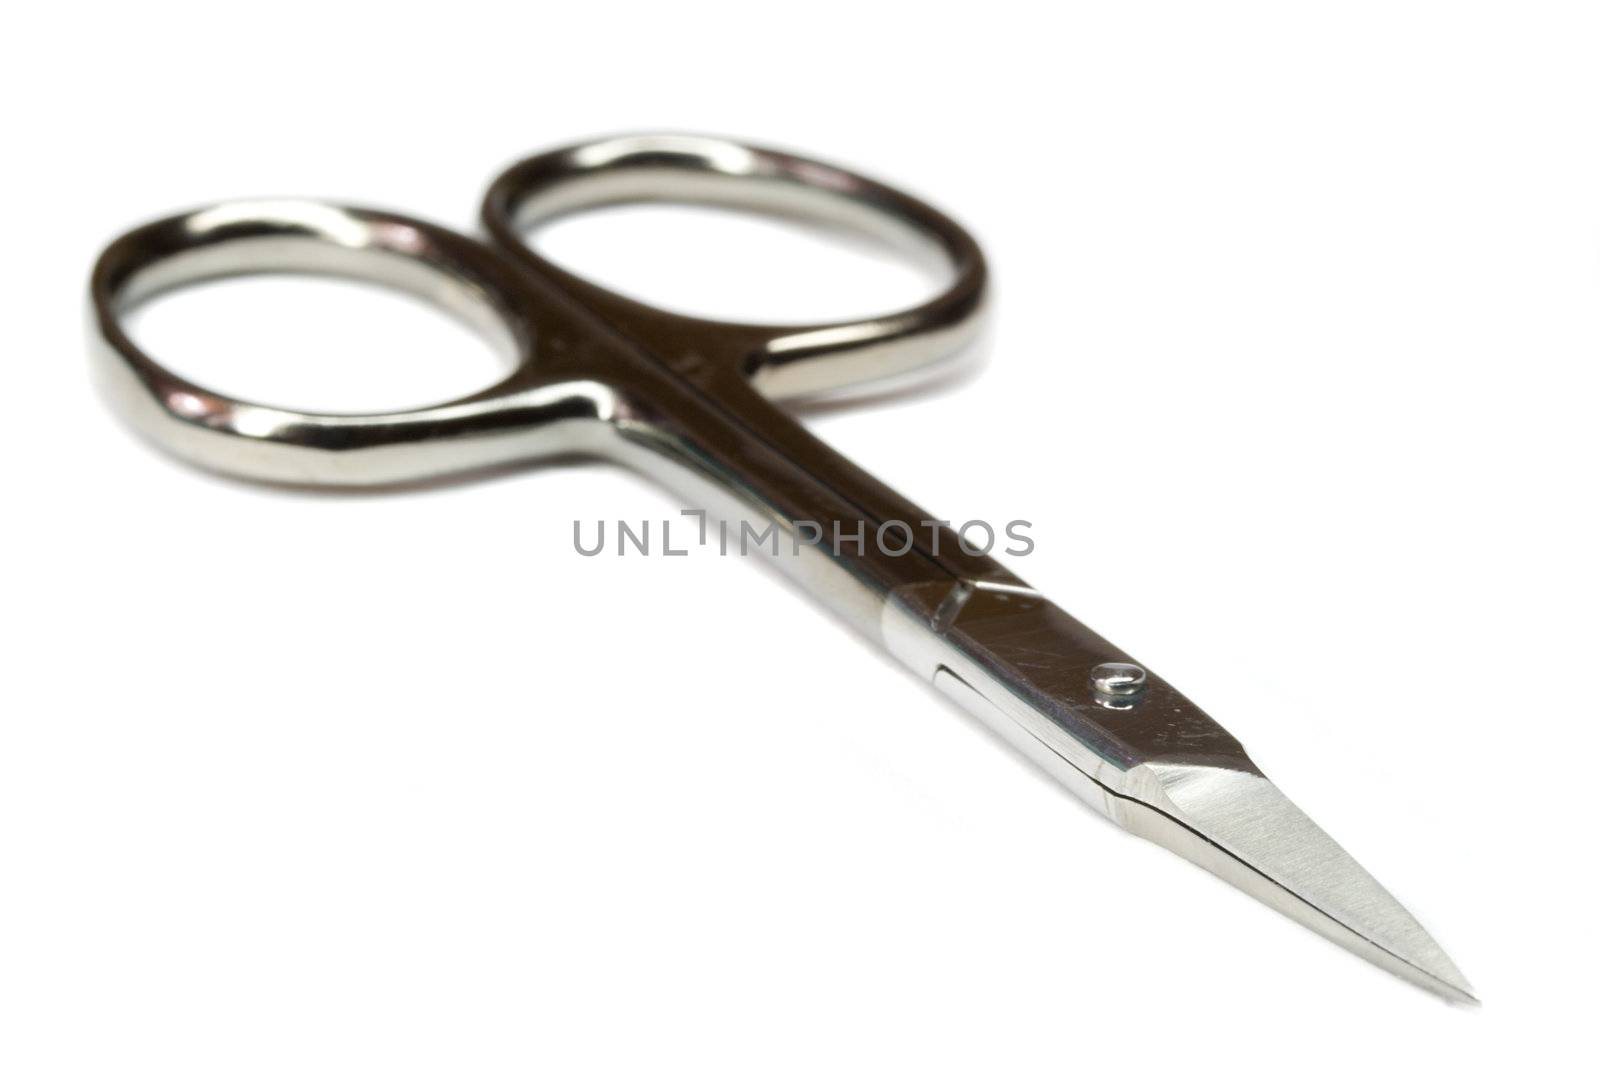 ose-up clnail scissors by Alekcey